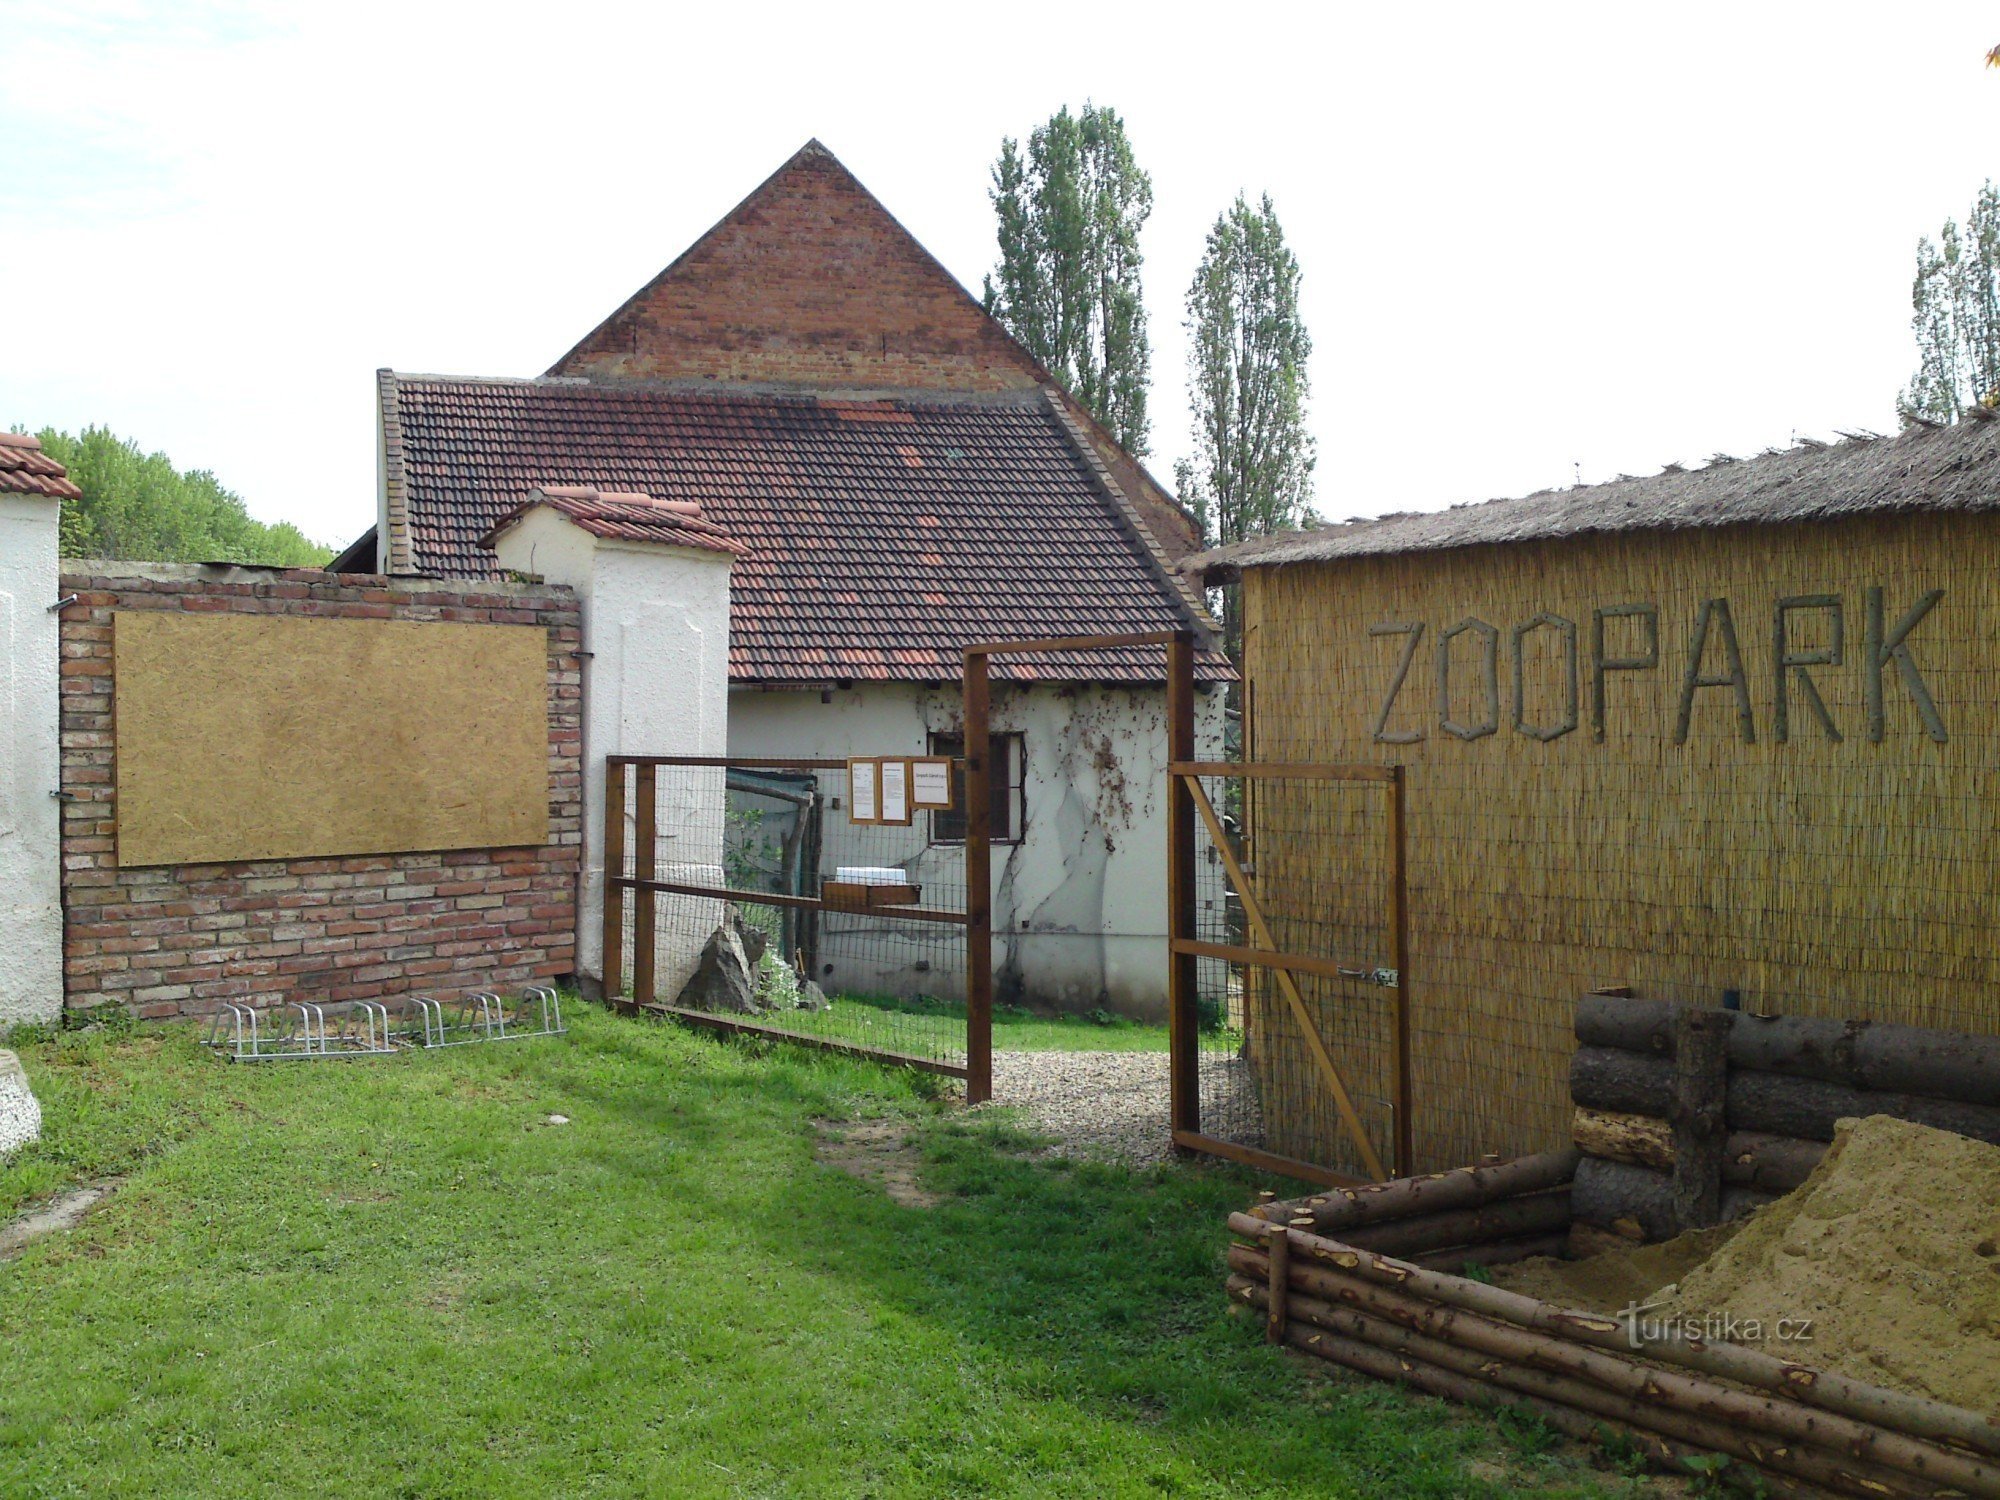 Zoopark Zájezd u Kladna